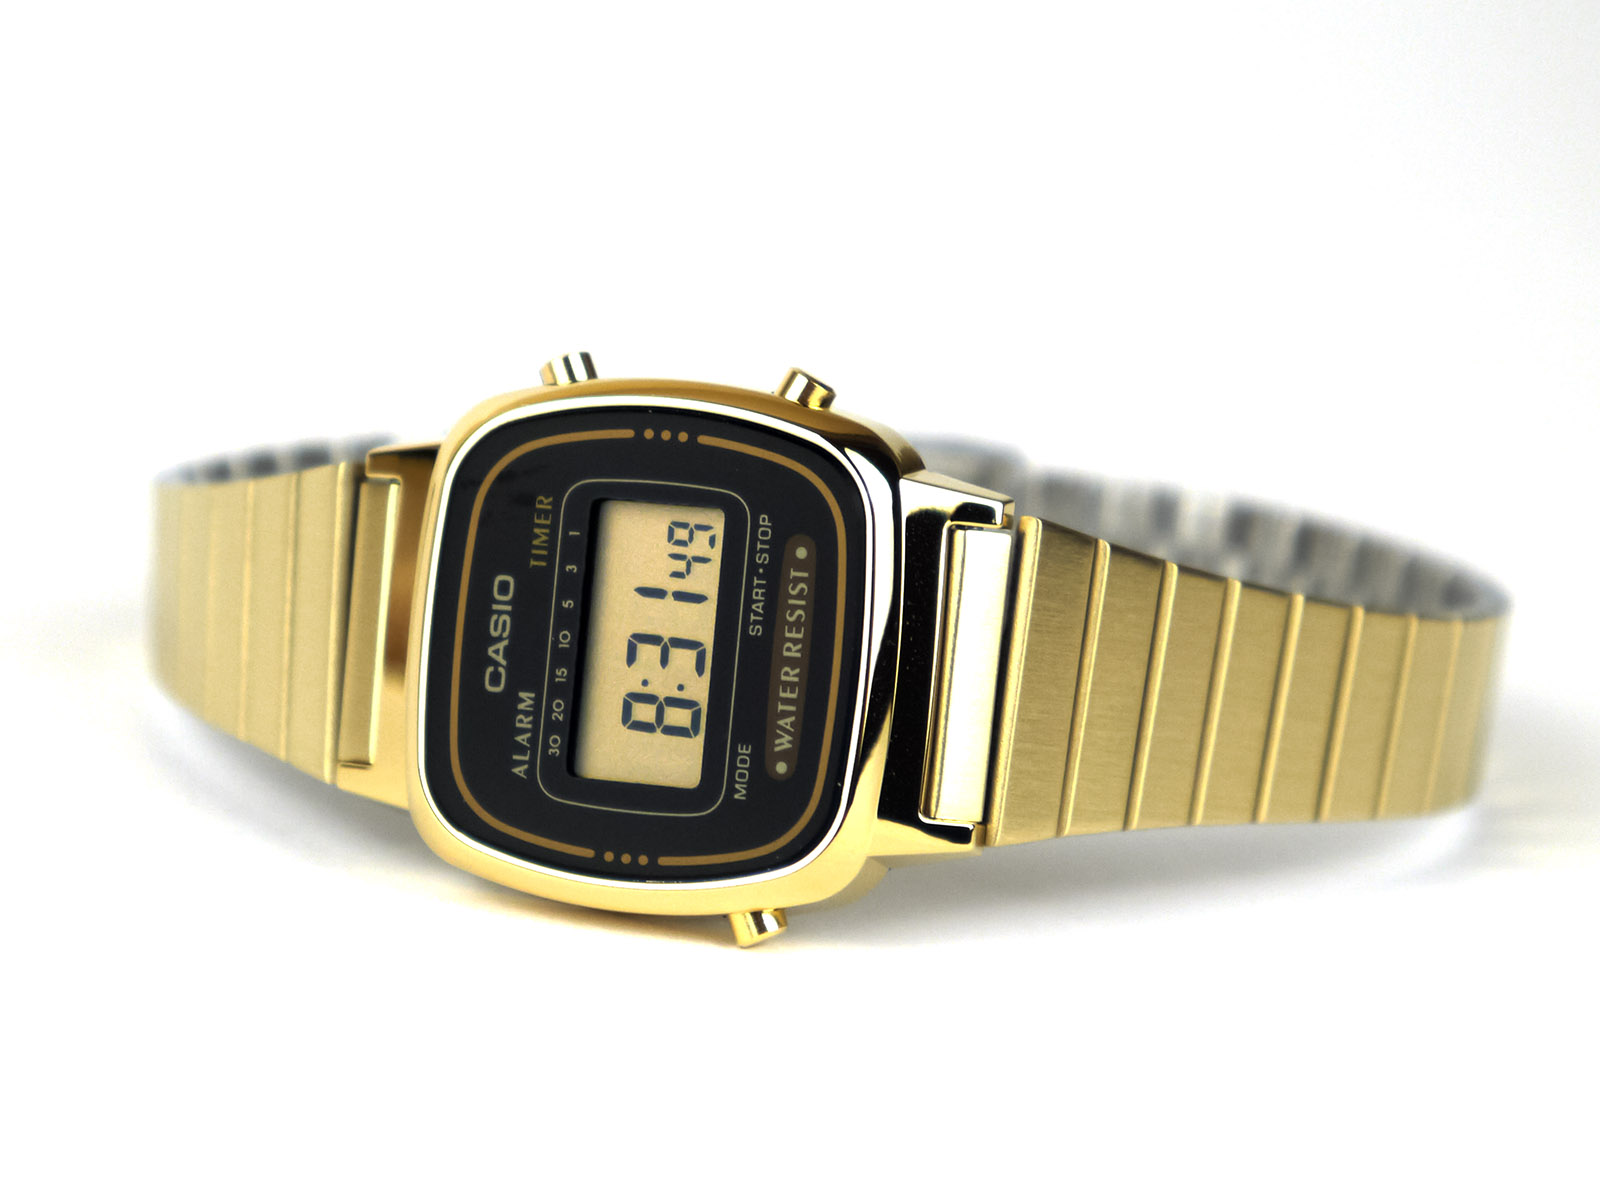 Casio Women's LA670WGA-1DF Daily Alarm Digital Gold-tone Watch